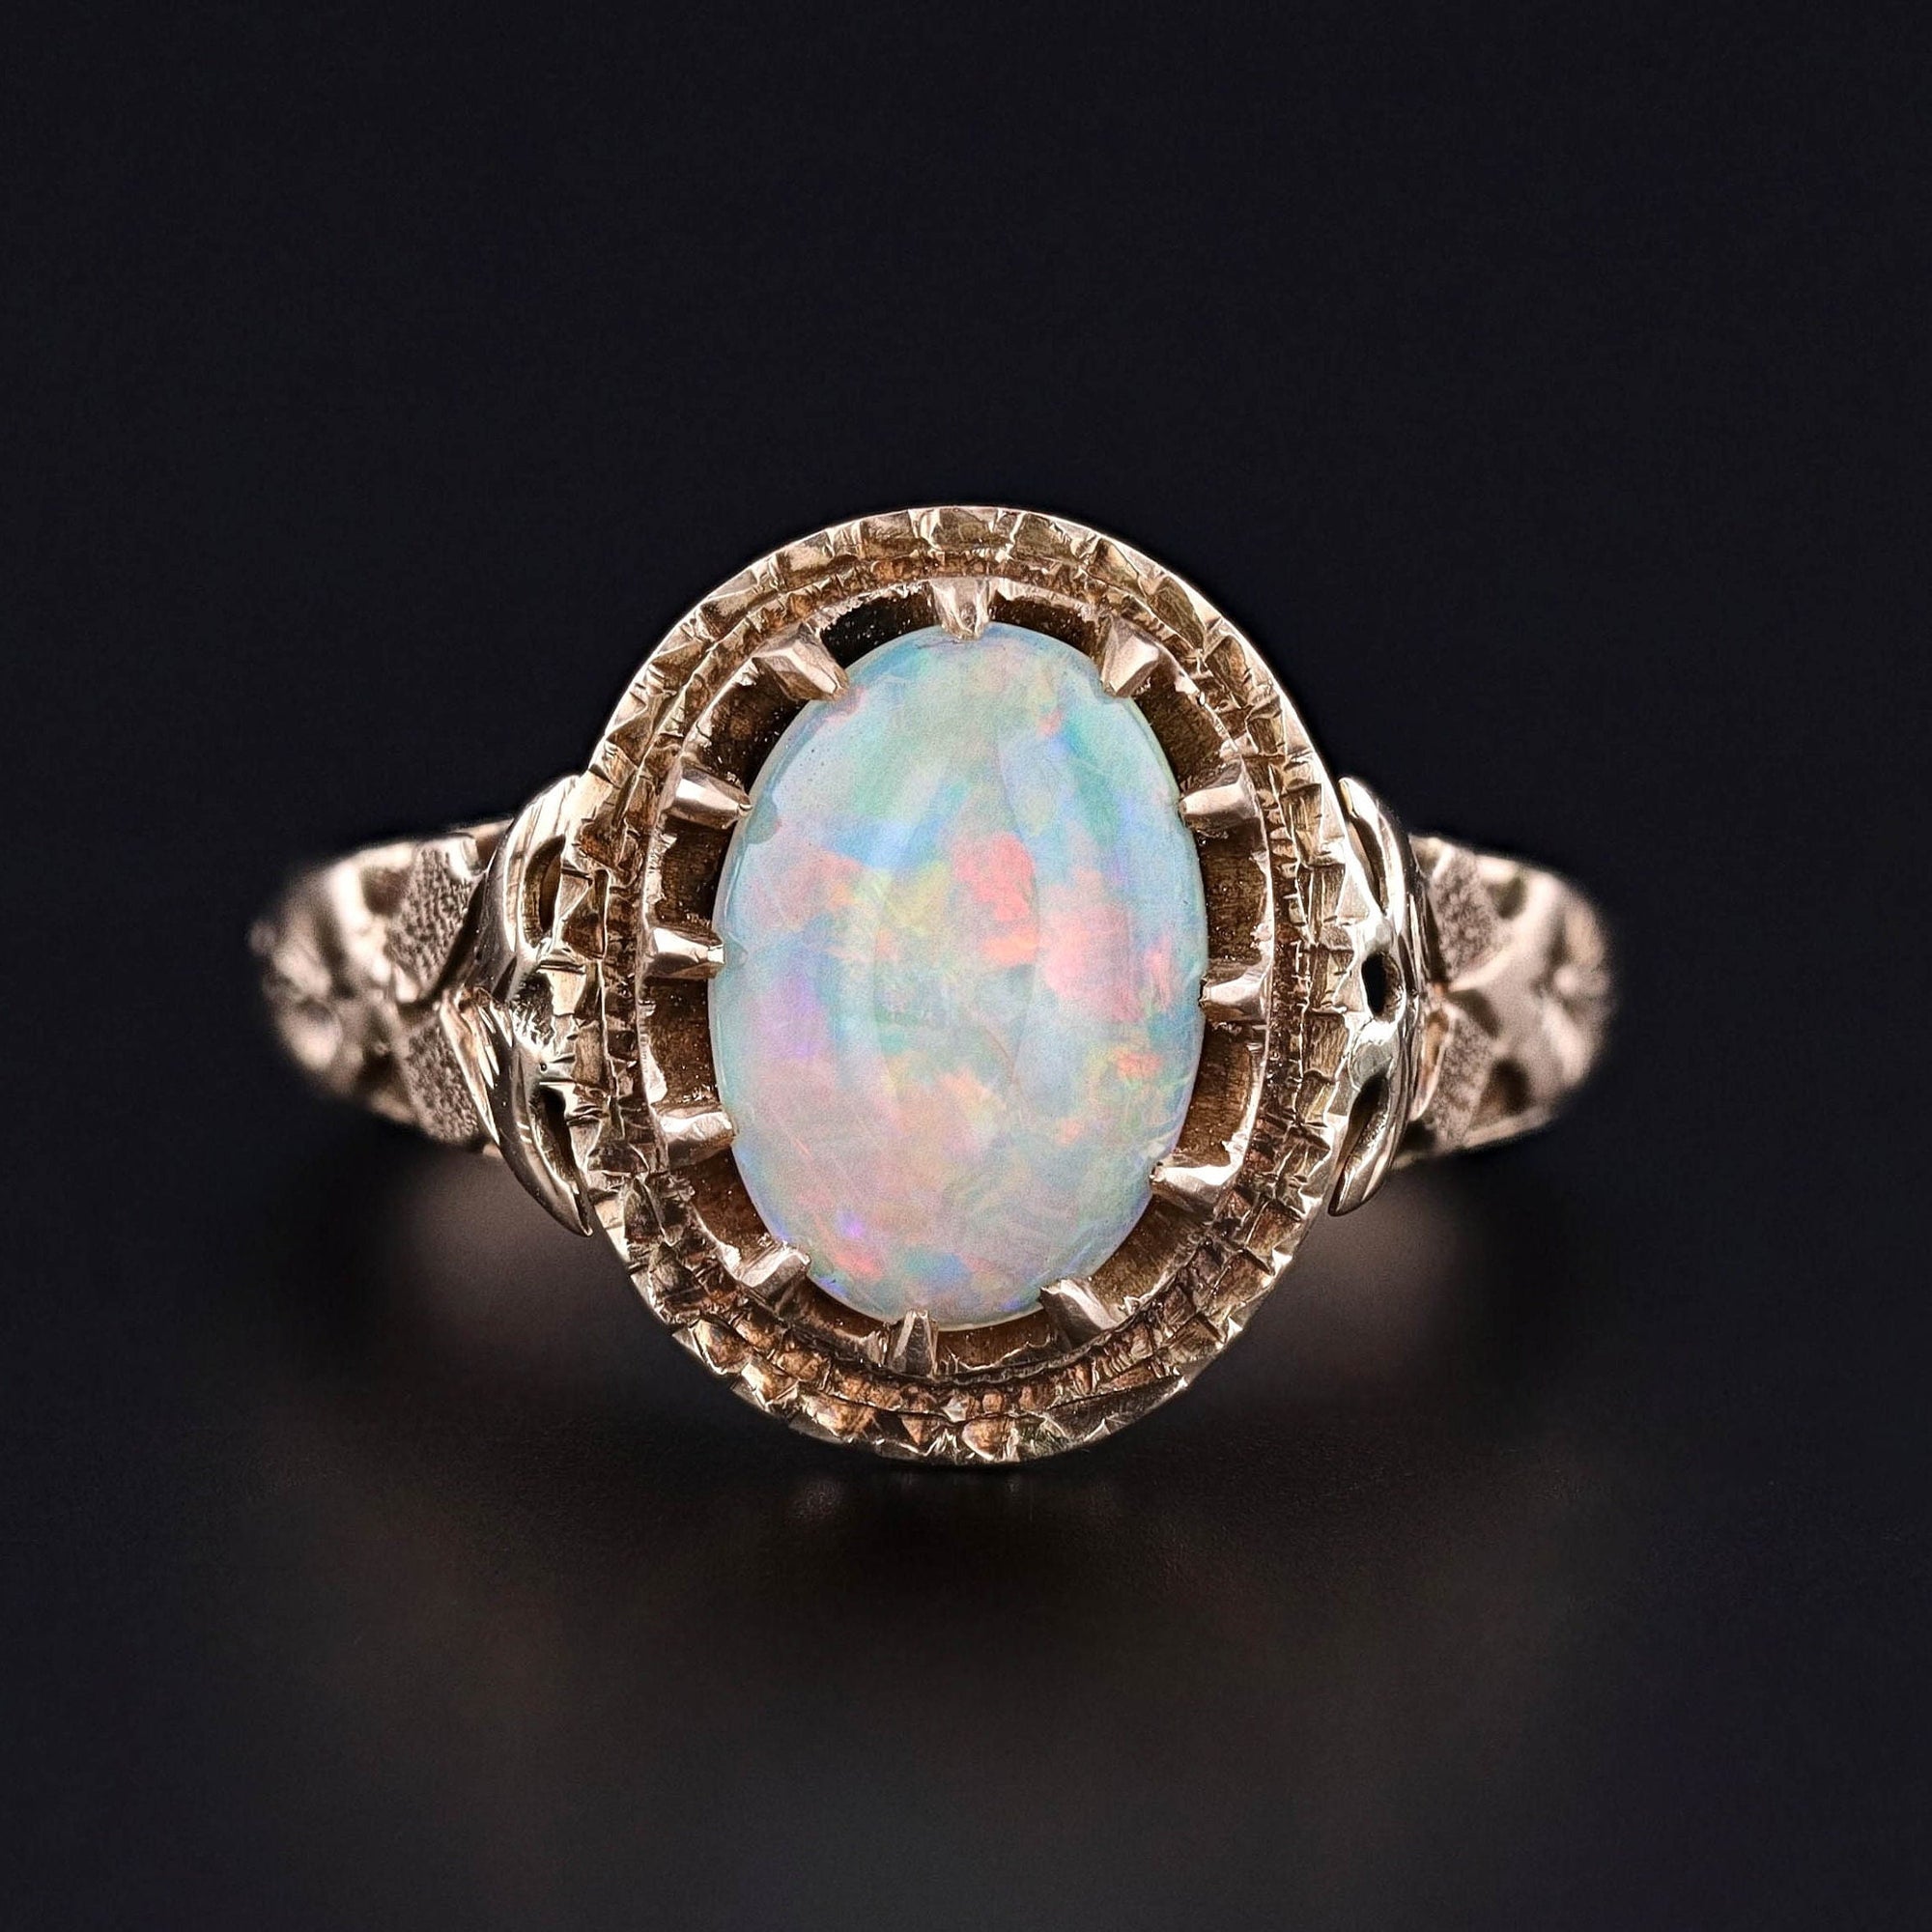 Antique Opal Ring of 14k Gold